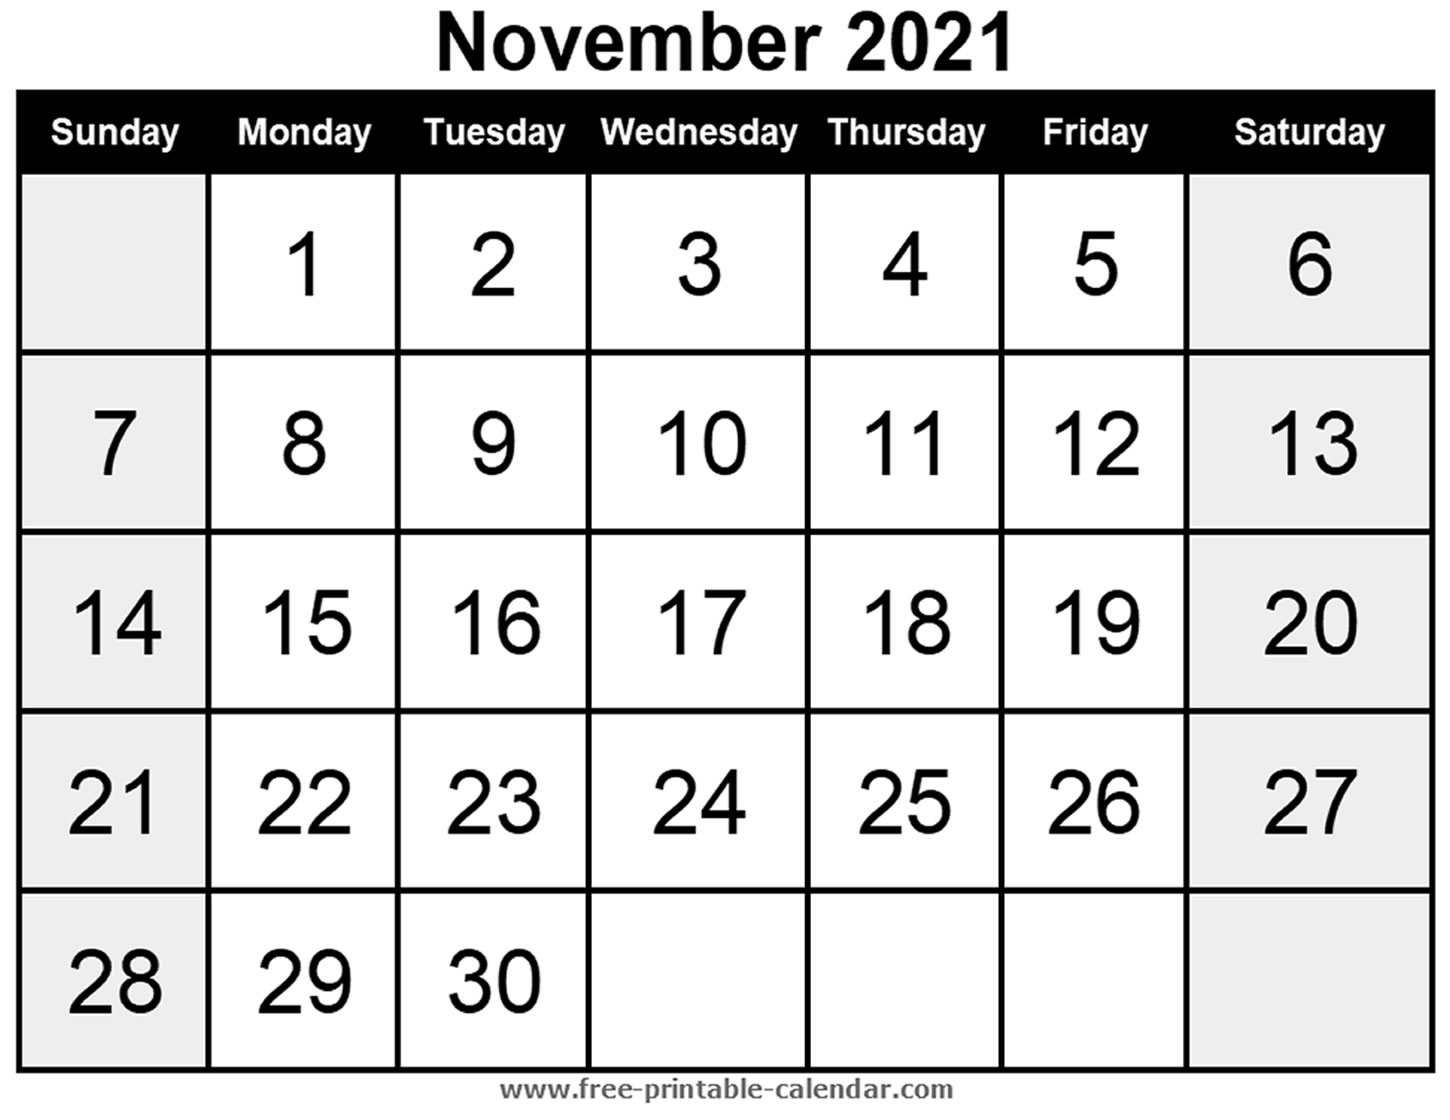 Blank Calendar November 2021 - Free-Printable-Calendar November 2021 Calendar Printable